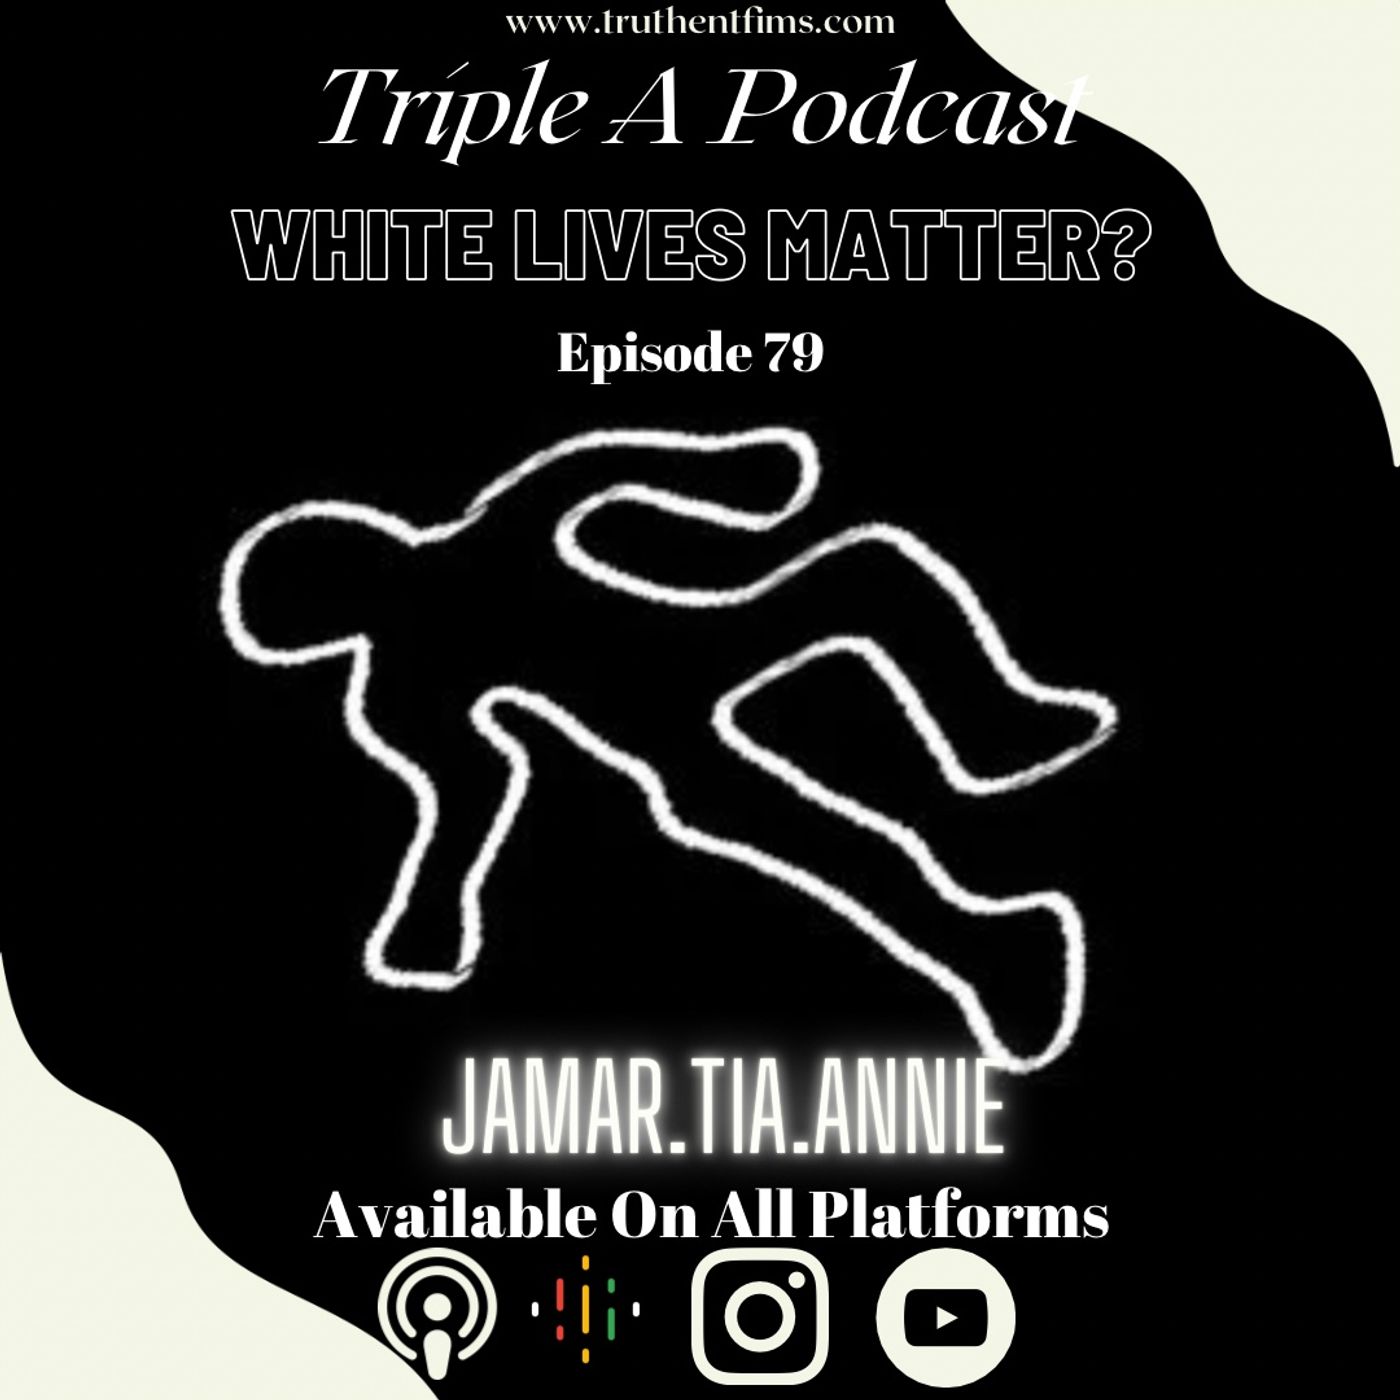 Triple A Podcast - Episode 79 White Lives Matter